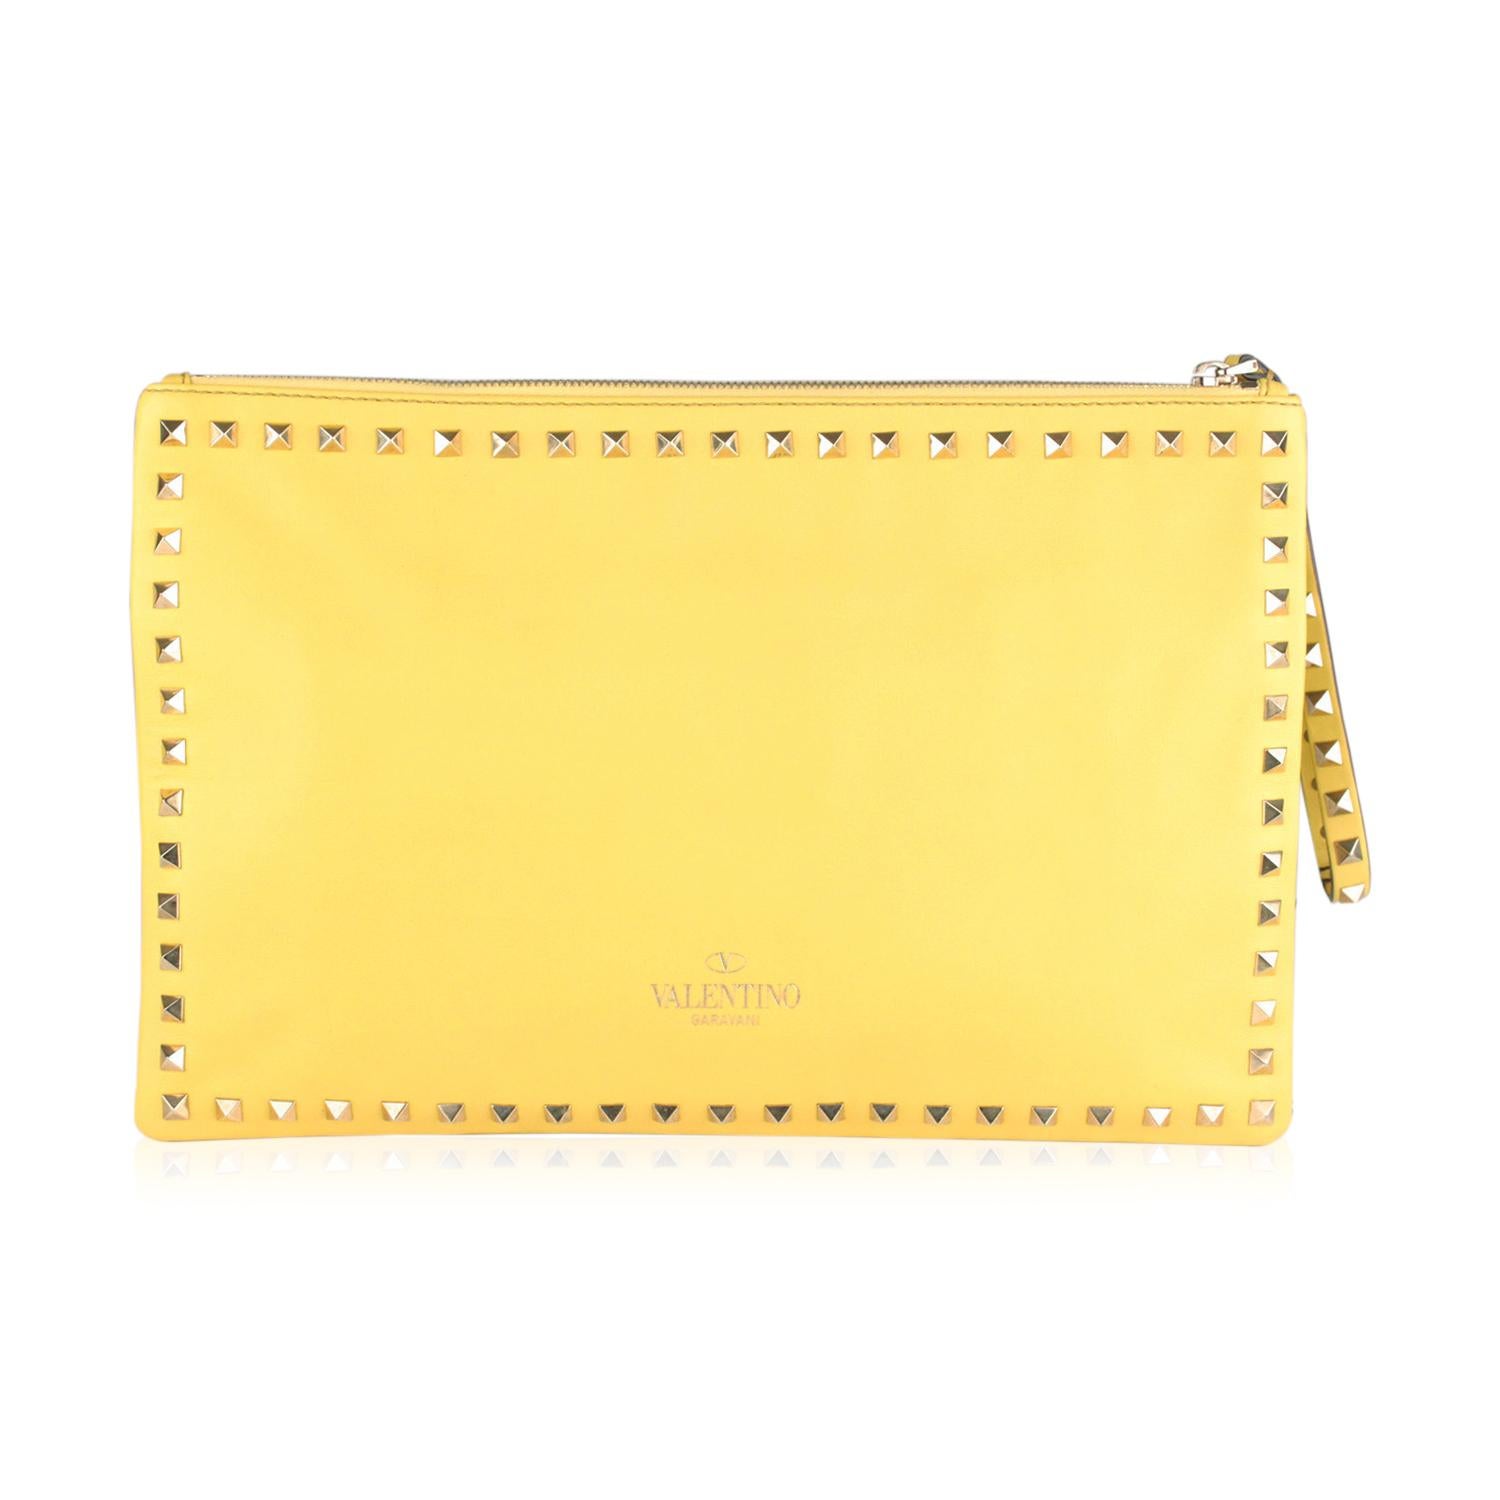 Valentino Yellow Leather Studded Rockstud Large Clutch Wrist Bag 1